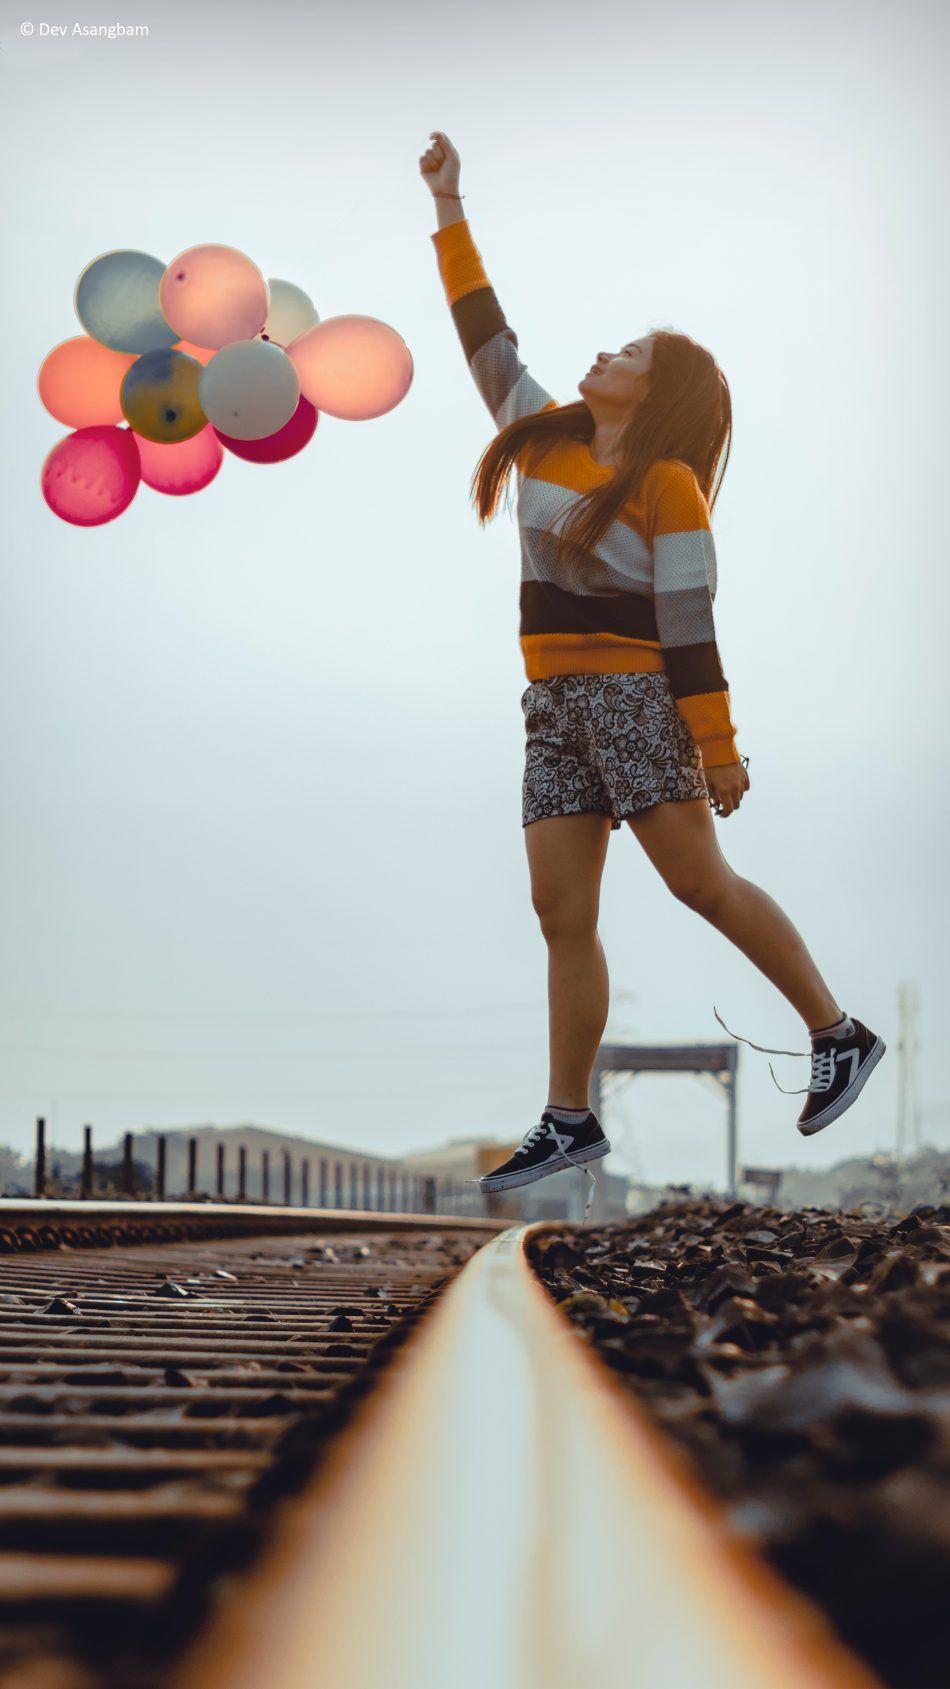 Happy Girl Jumping Balloons Train Track Photography 4K Ultra HD Mobile Wallpaper. Train tracks photography, Train track poses, Girl picture